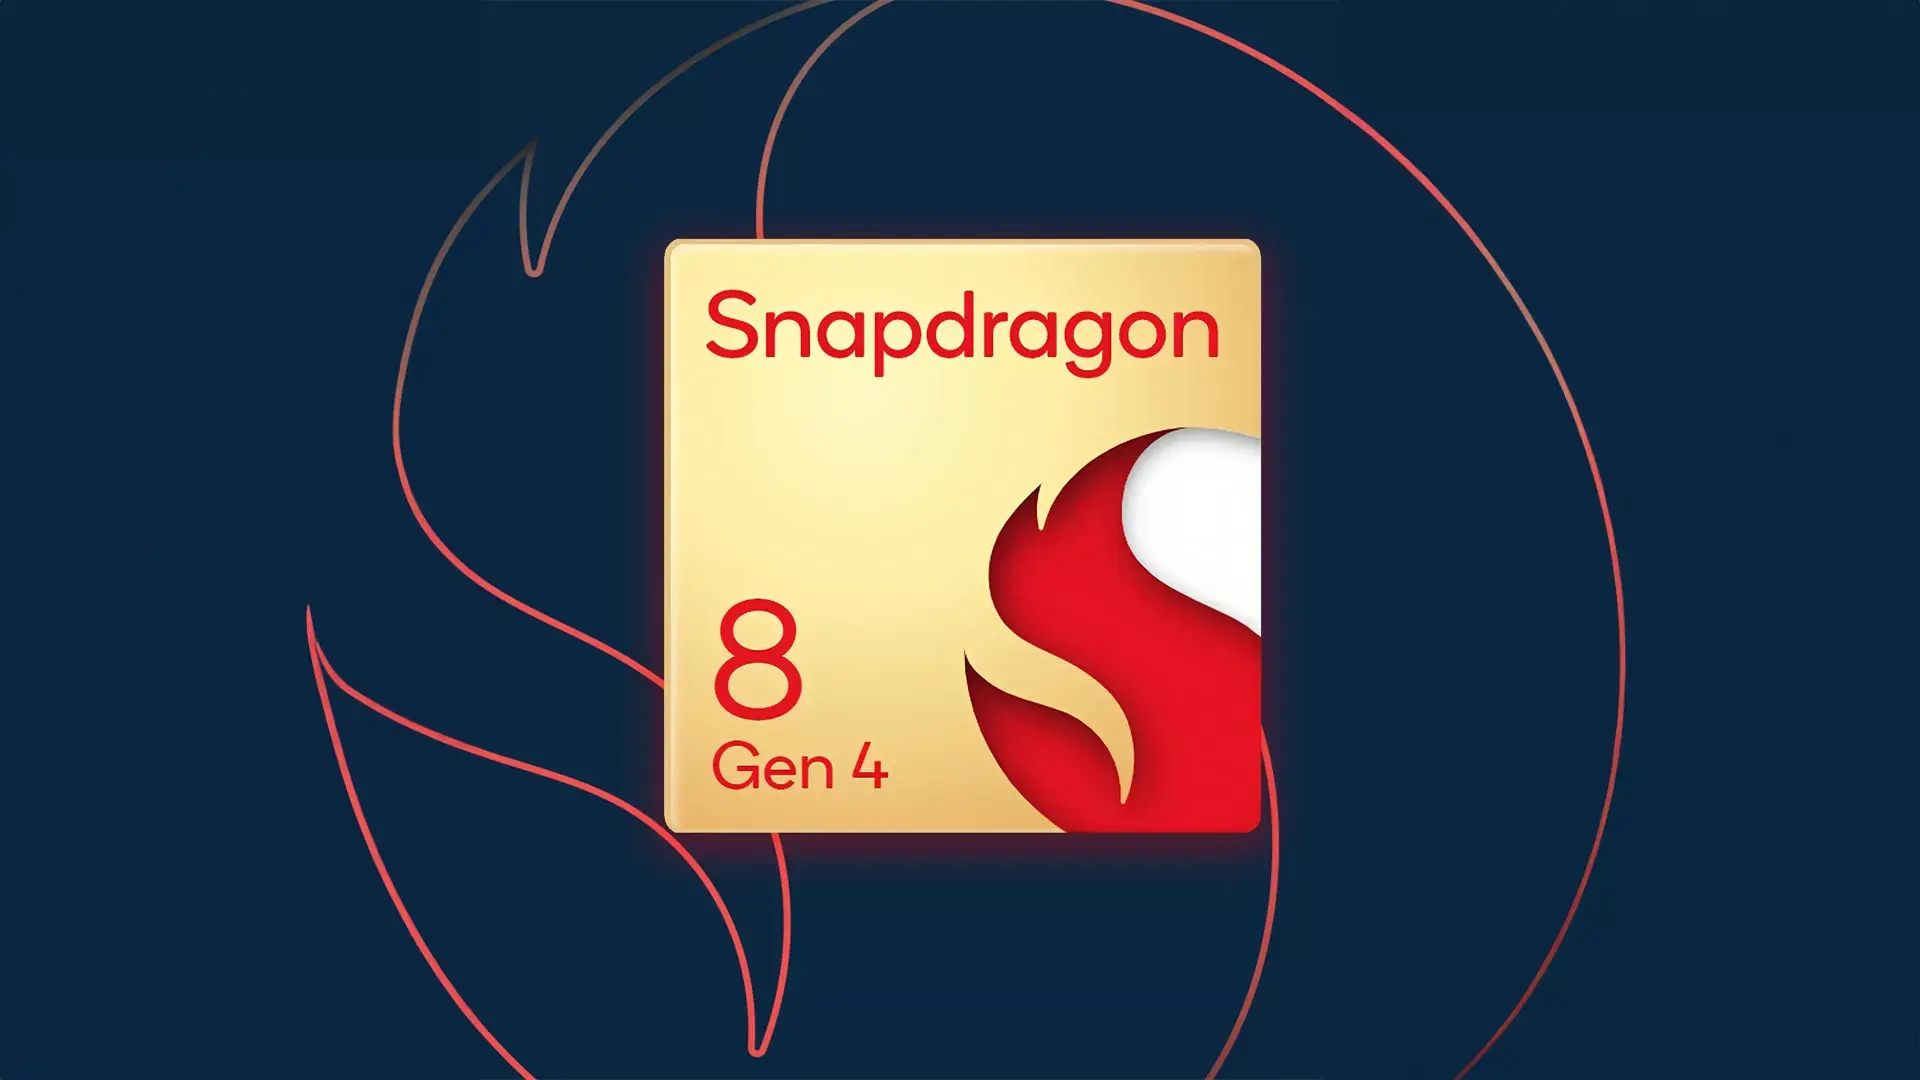 Qualcomm’s latest flagship processor, the Snapdragon 8 Gen4, is set to revolutionize the mobile processing landscape